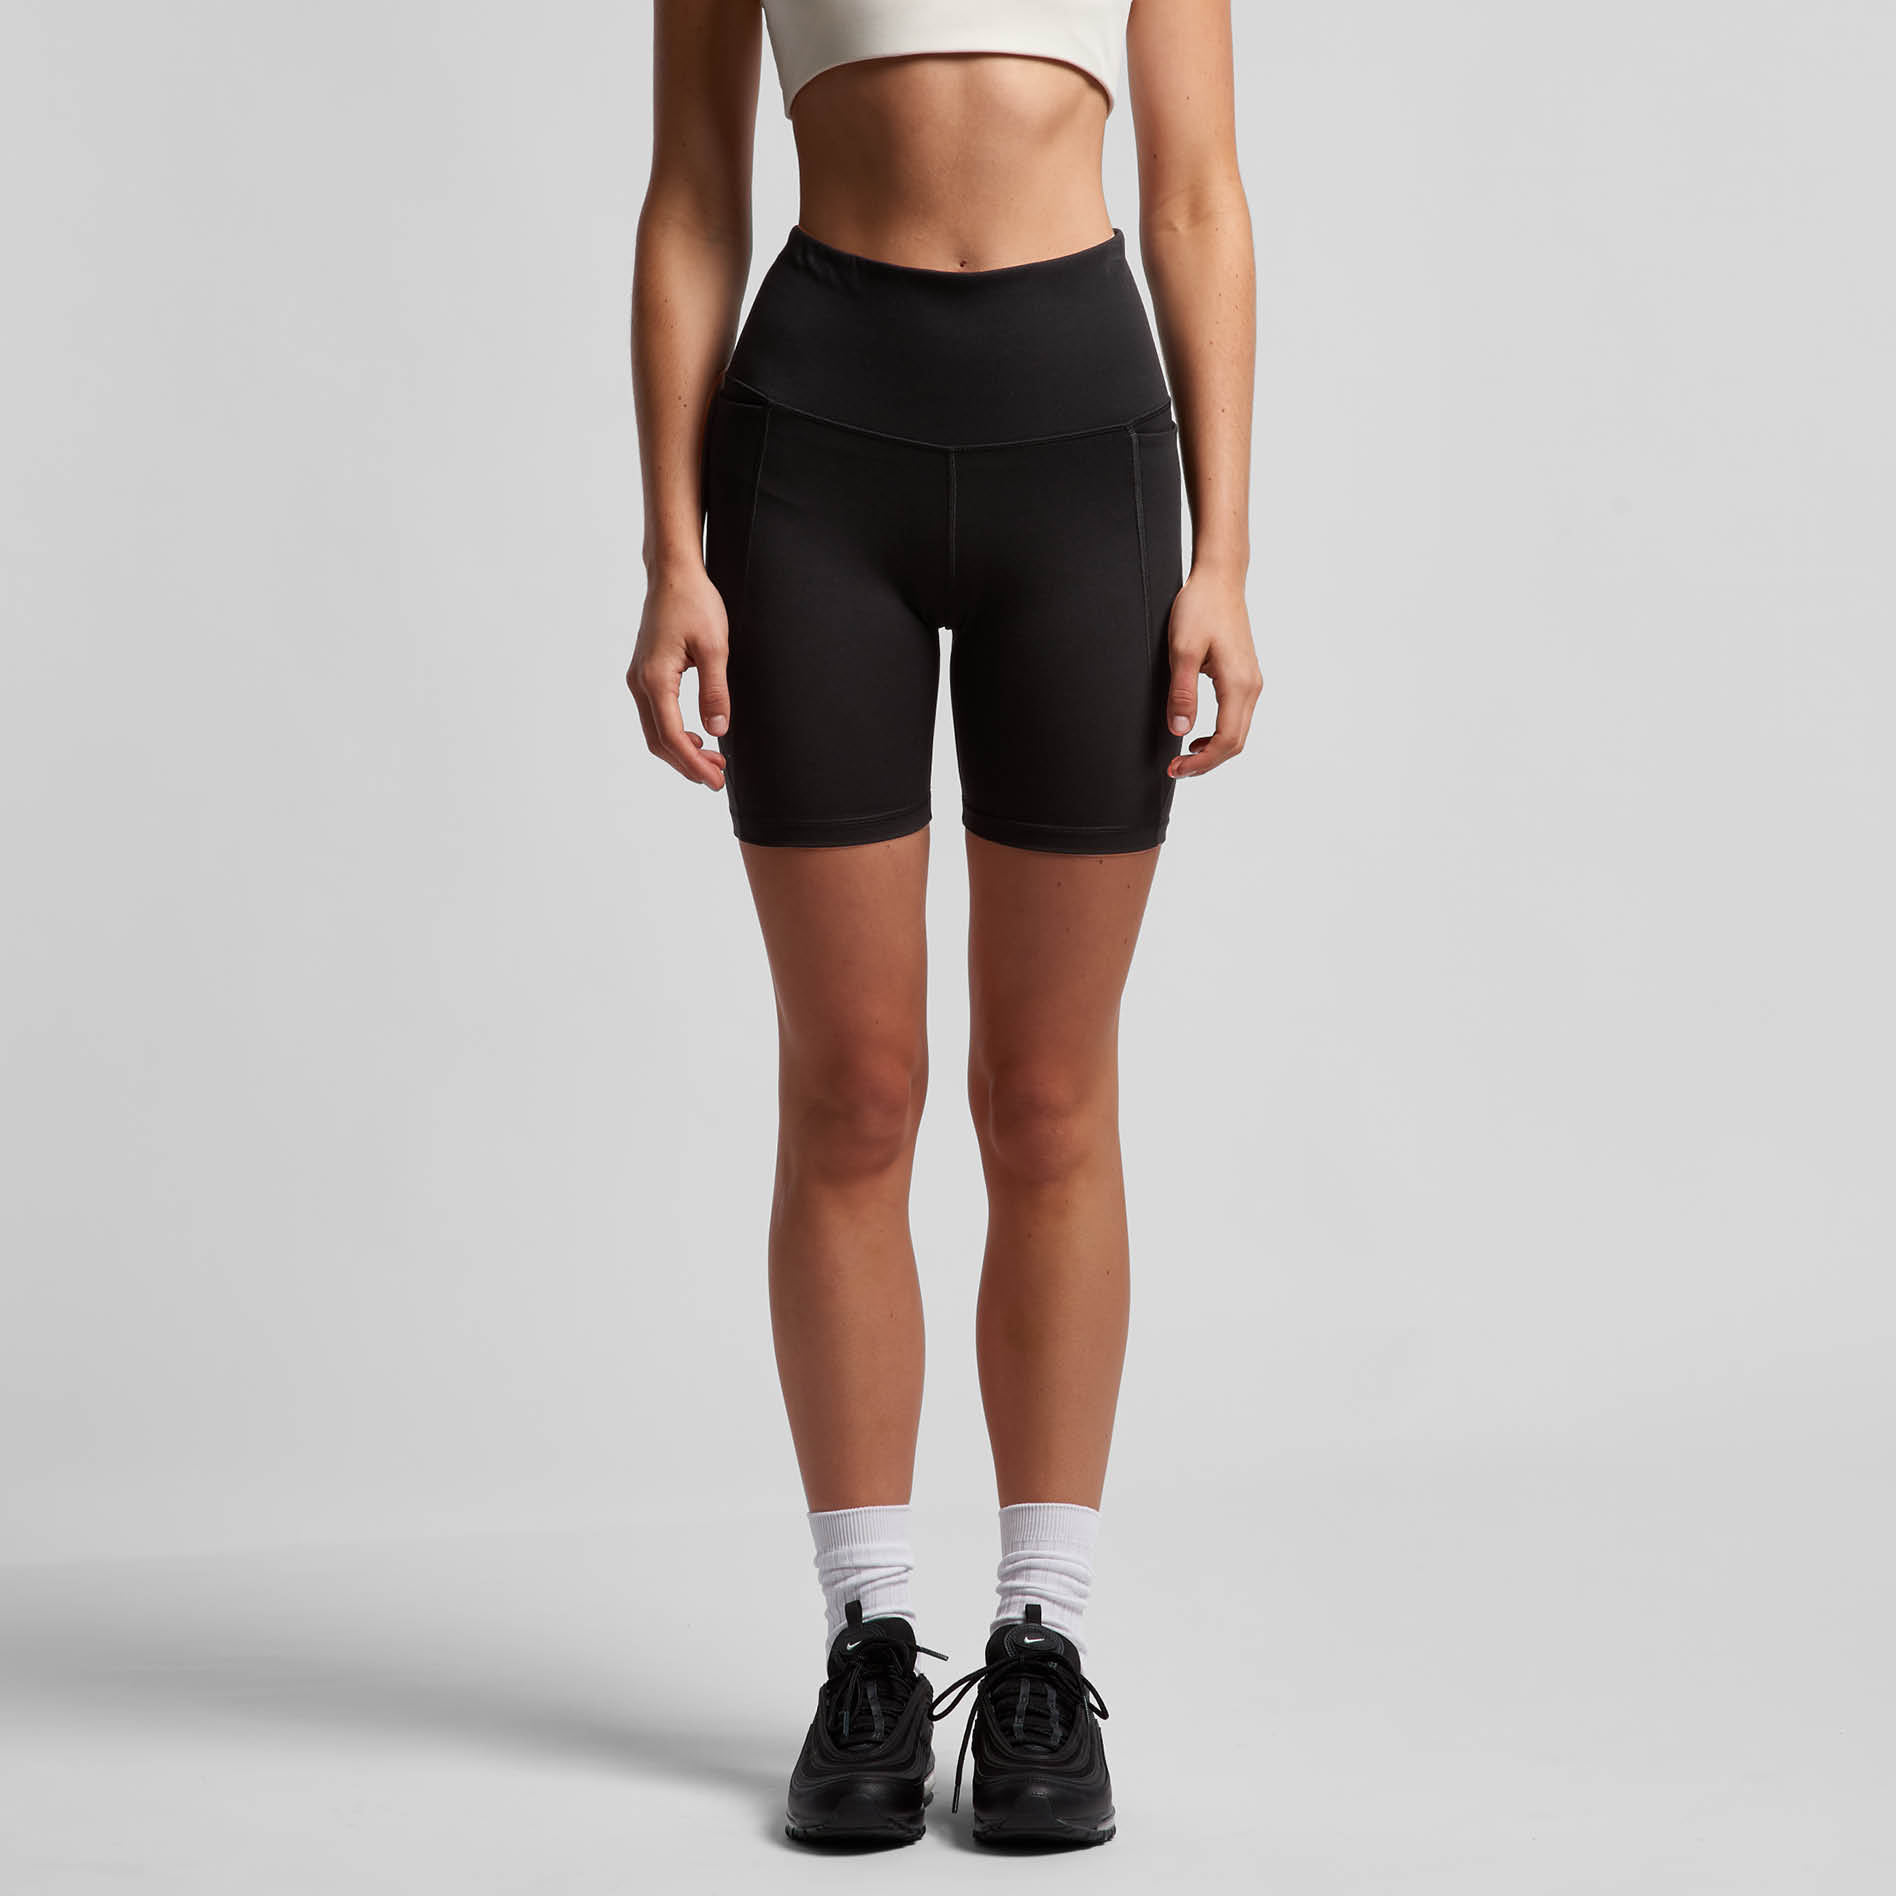 Women's Active Bike Shorts | Branded Bike Shorts | Custom Bike Shorts